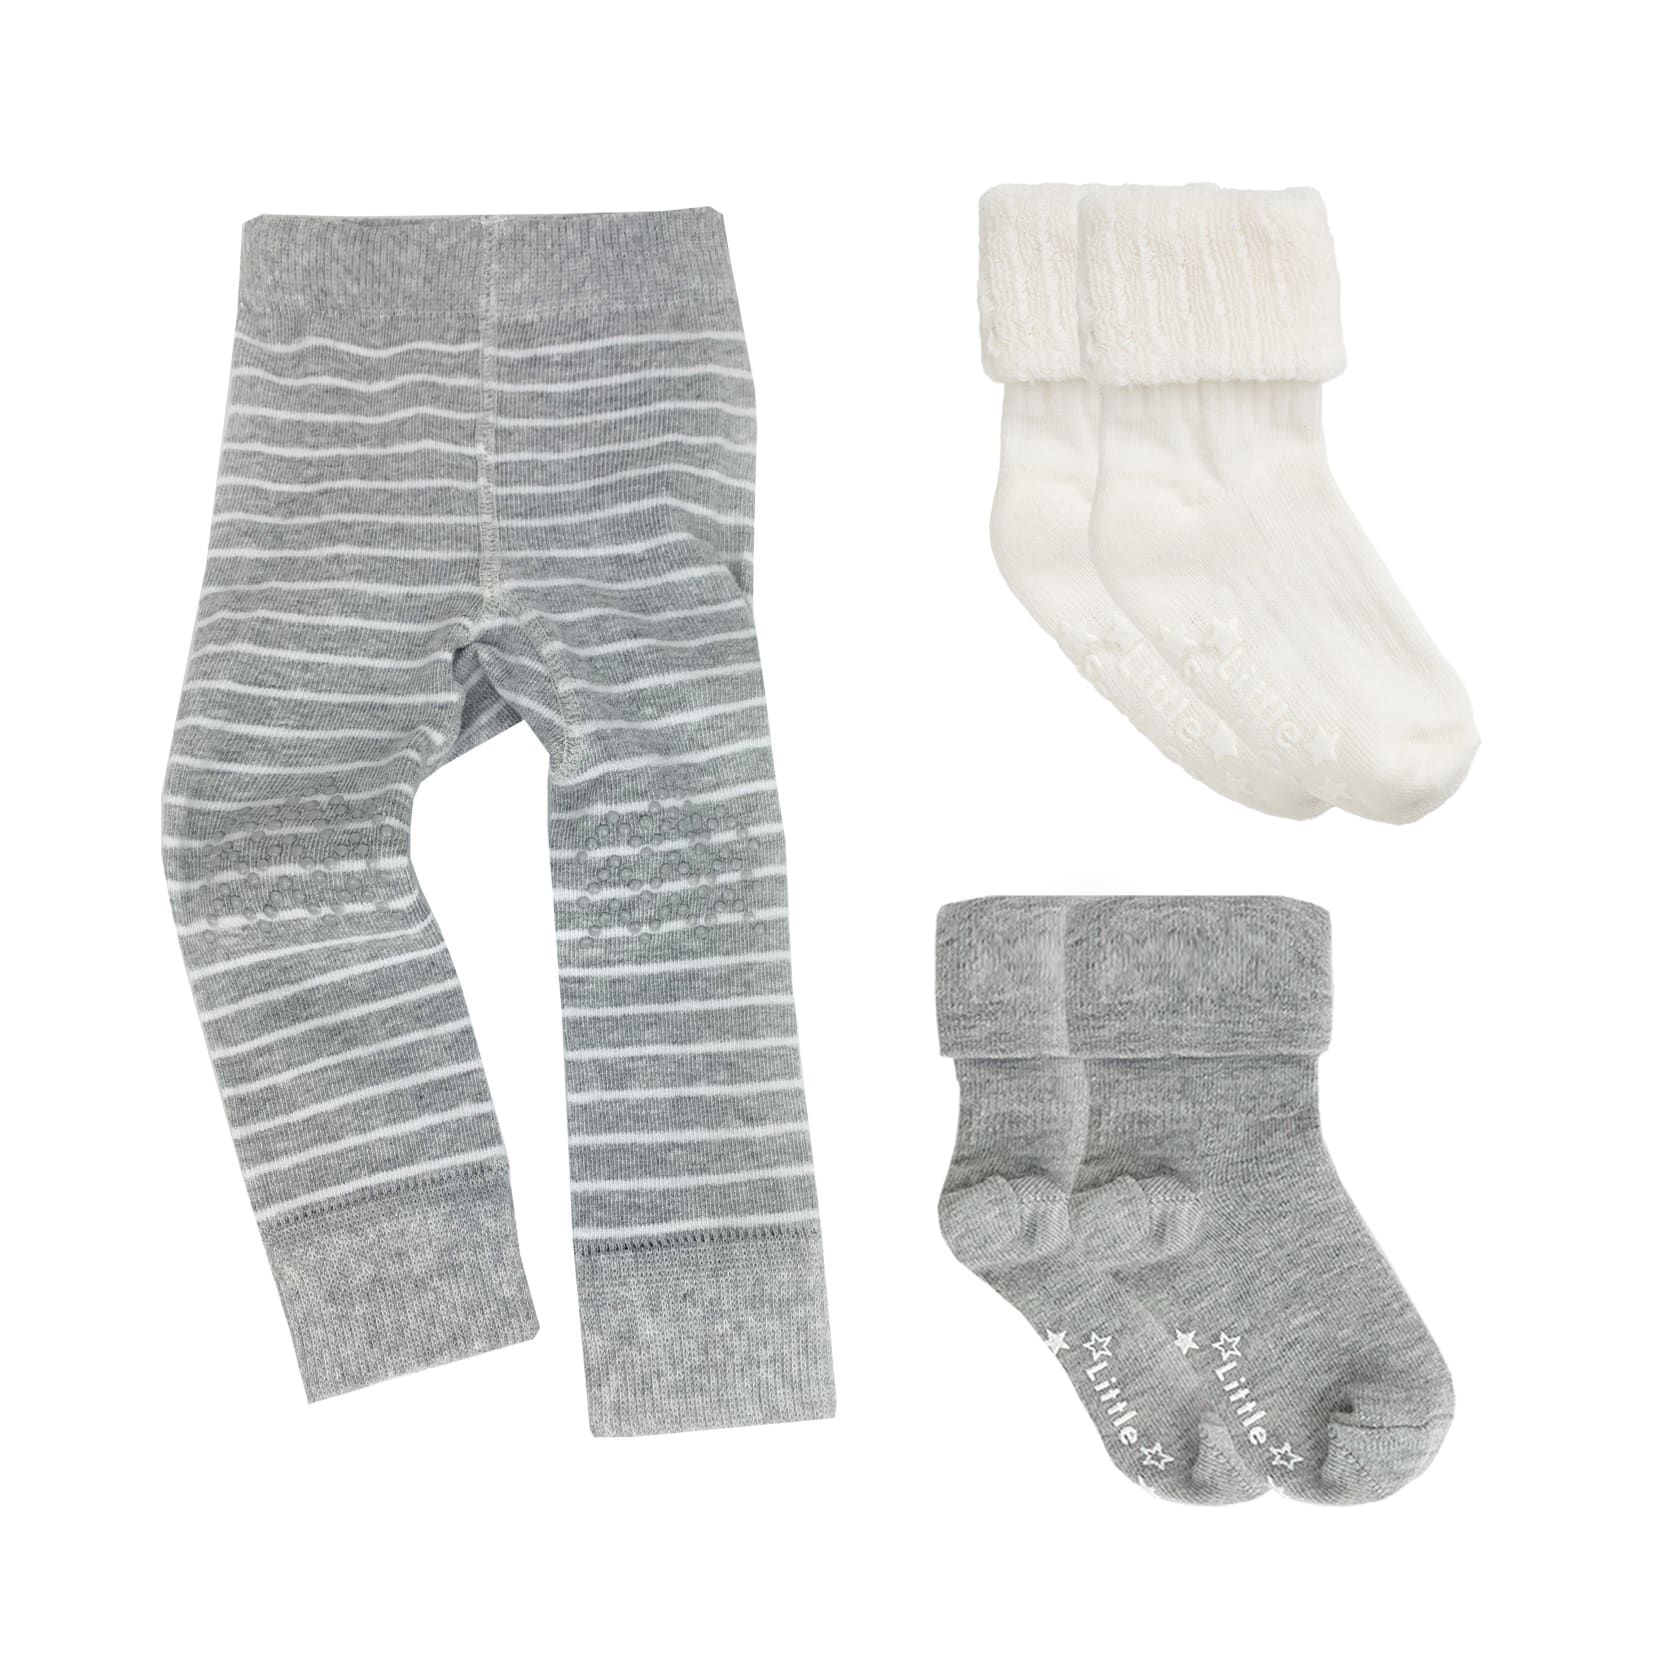 Leggings & Socks Super Set - Grey